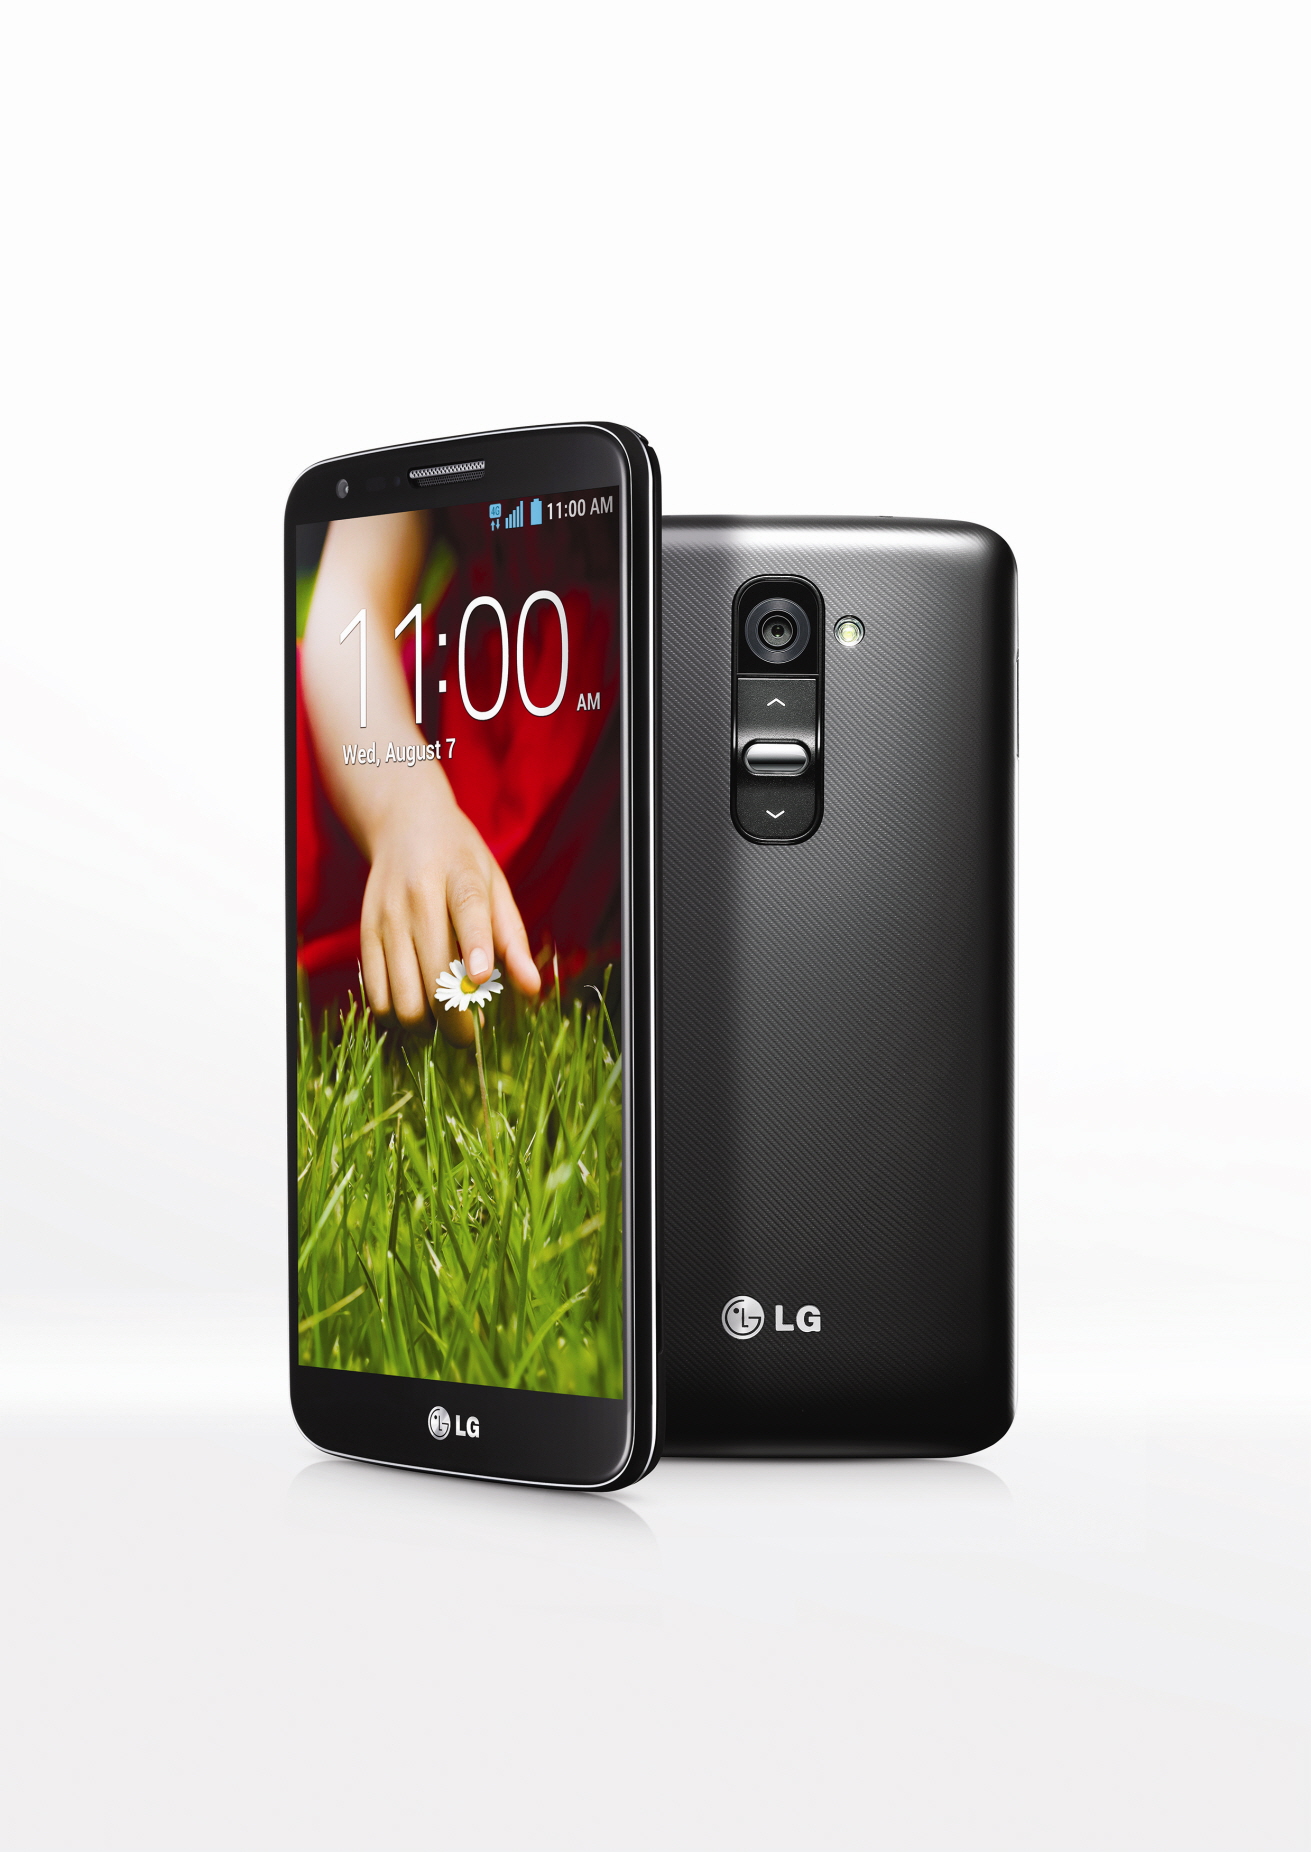 LG presentó su nuevo teléfono G2